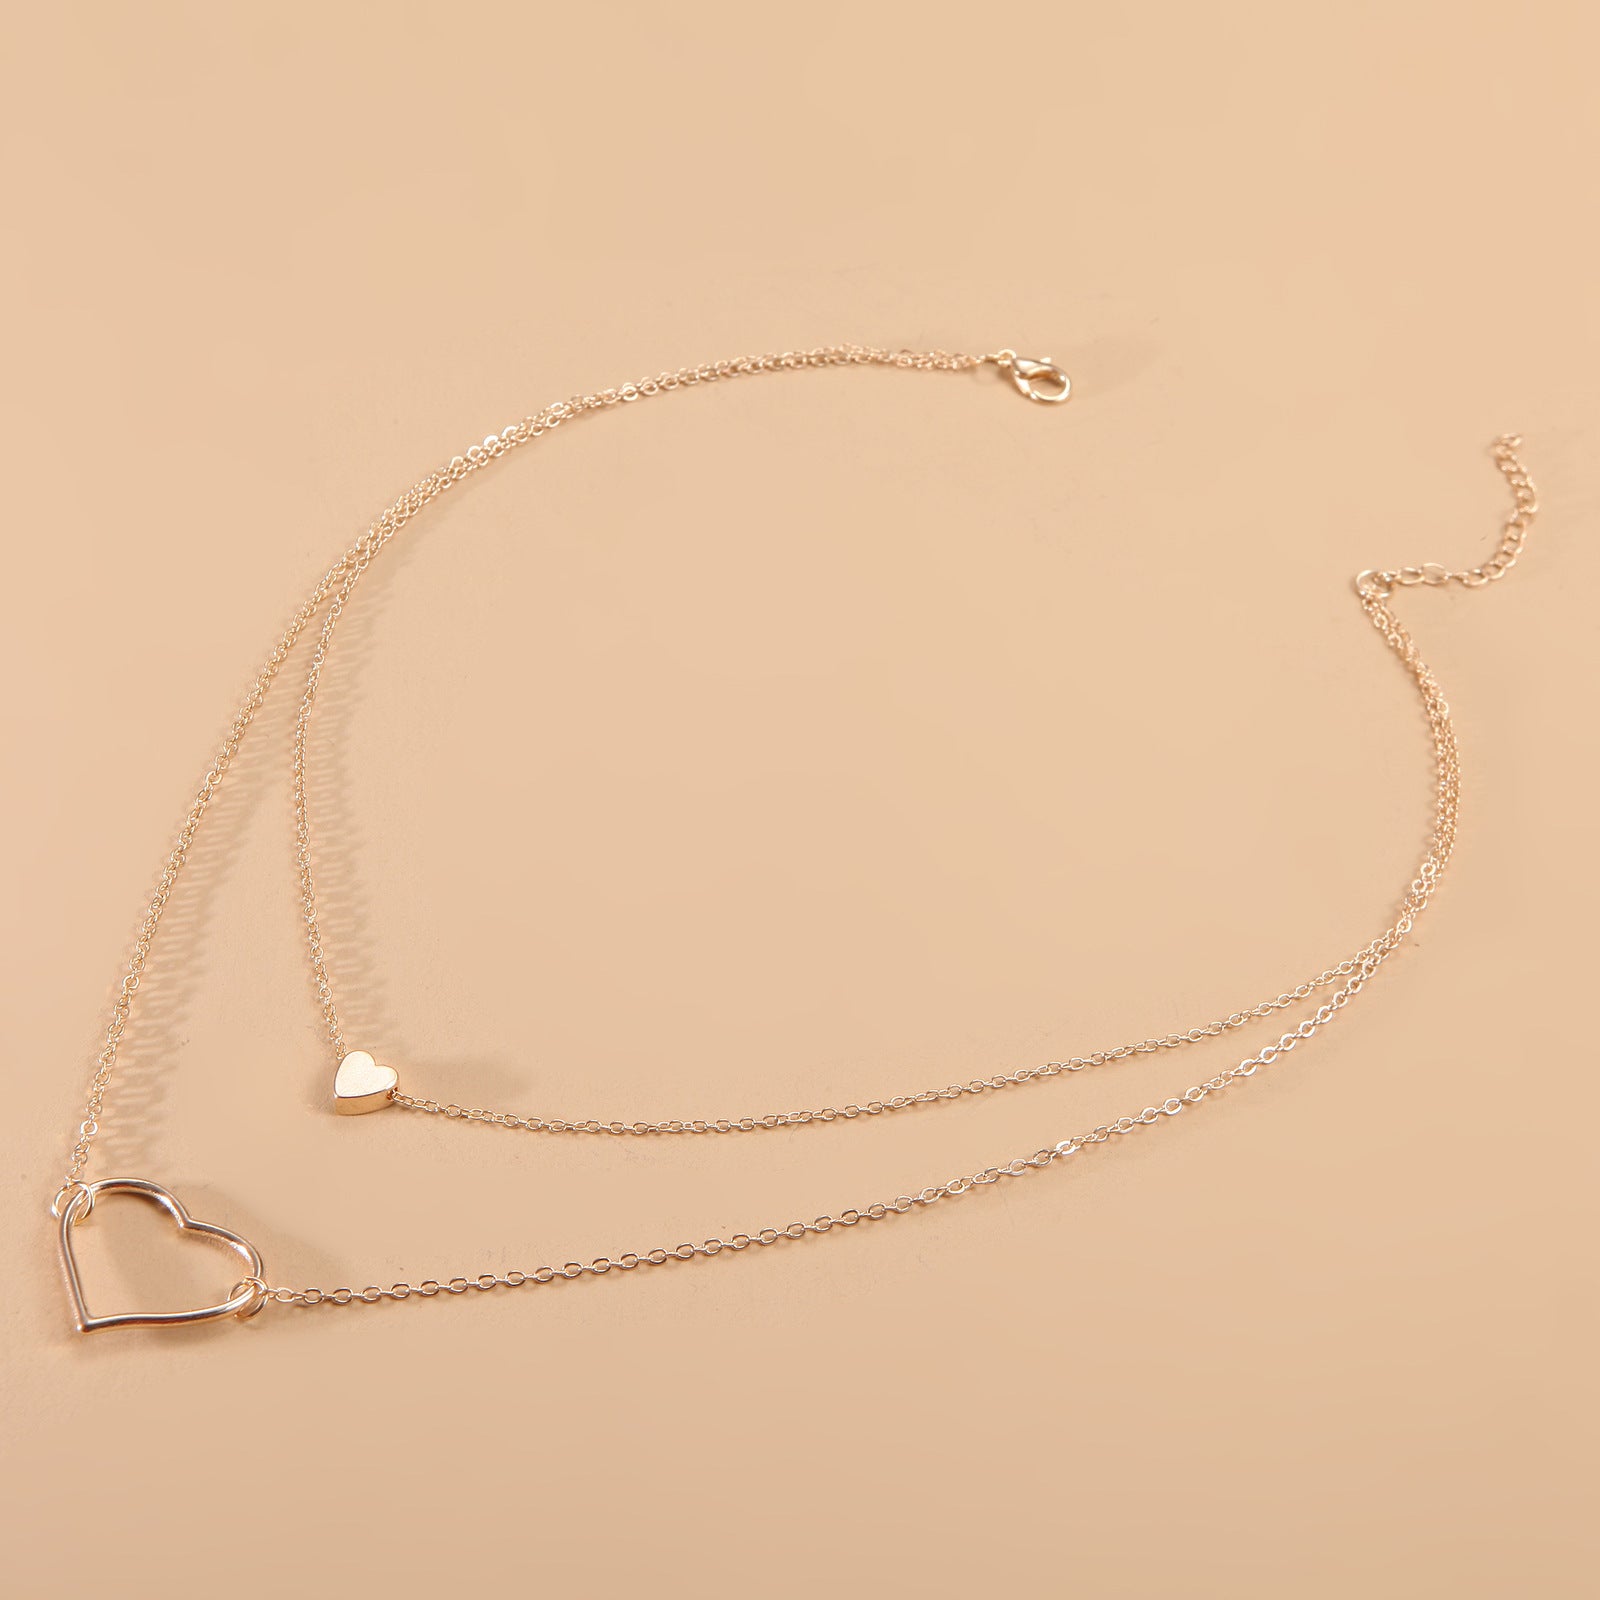 Arzonai jewelry fashion simple style big heart love combination necklace women multi-layer chain pendant necklace